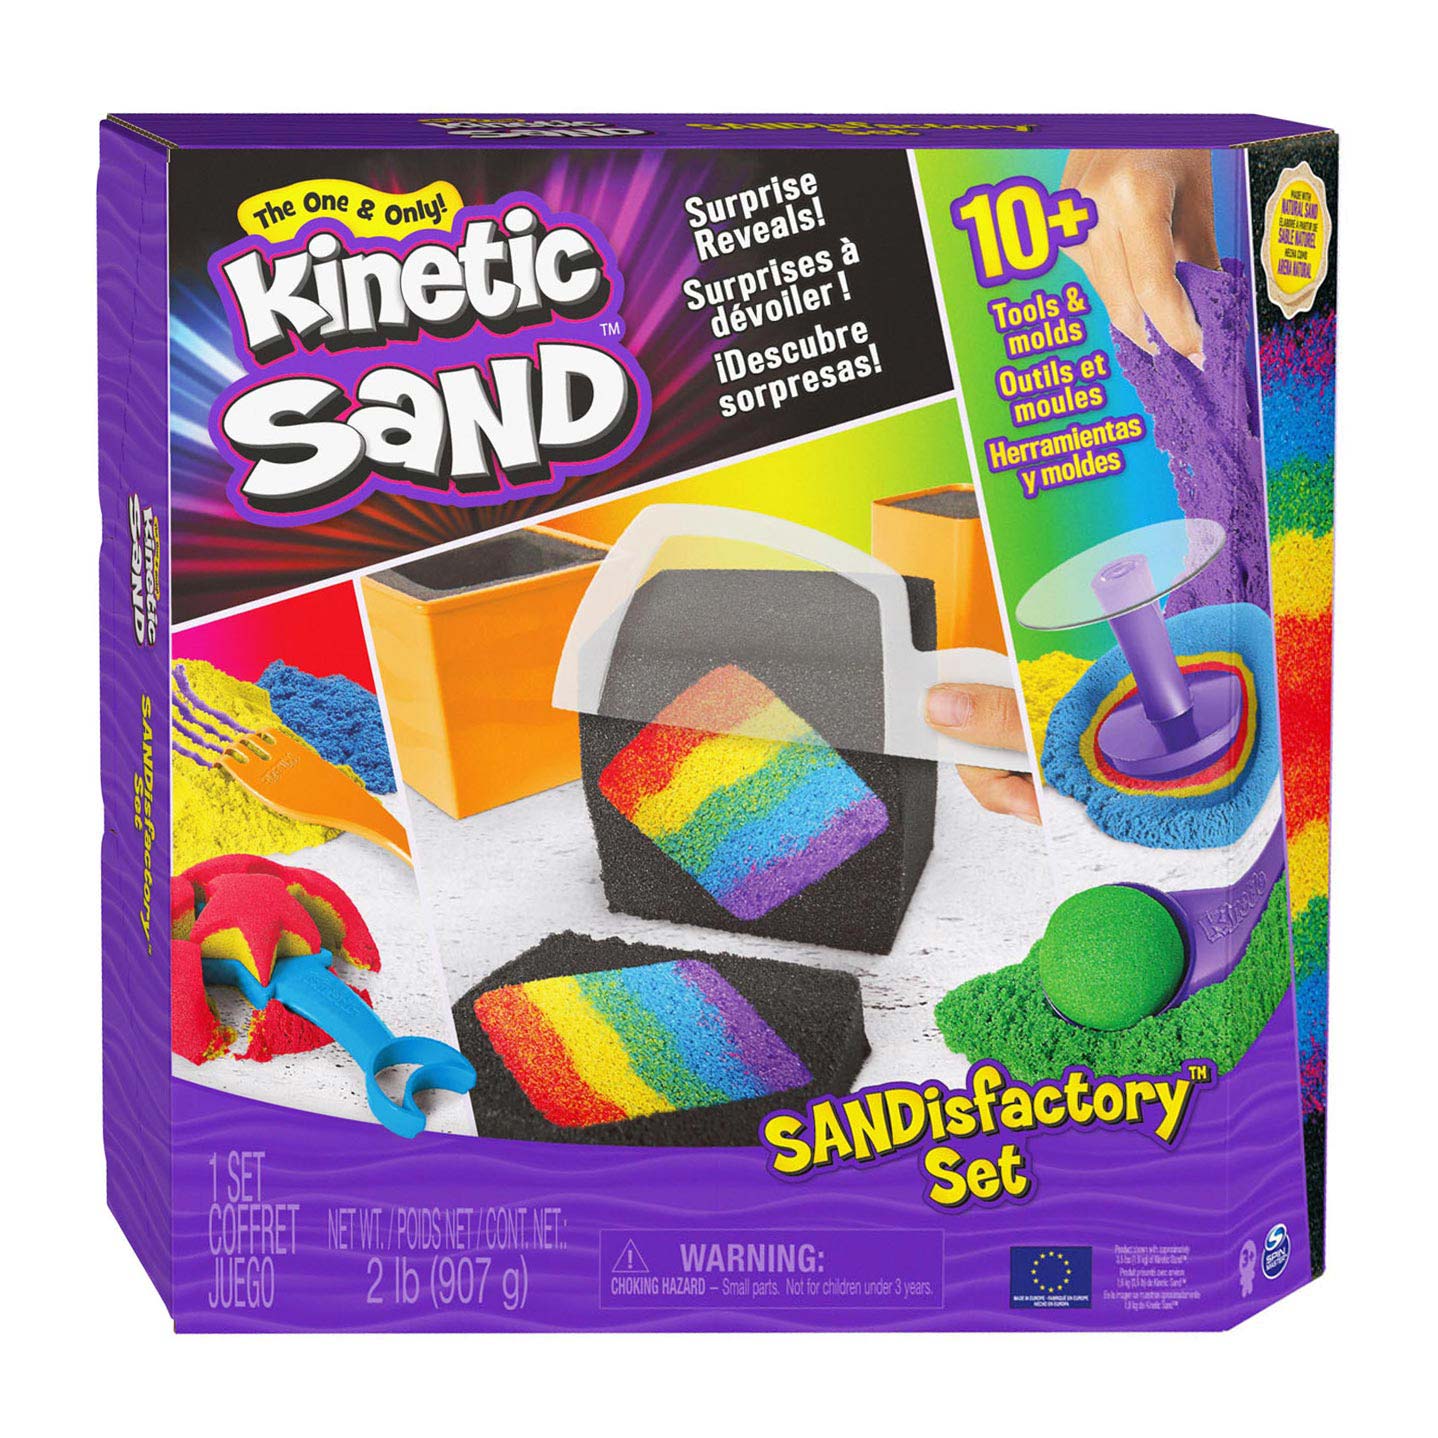 Kinectic Sand - Sandisfactory Speelset, 907gr.